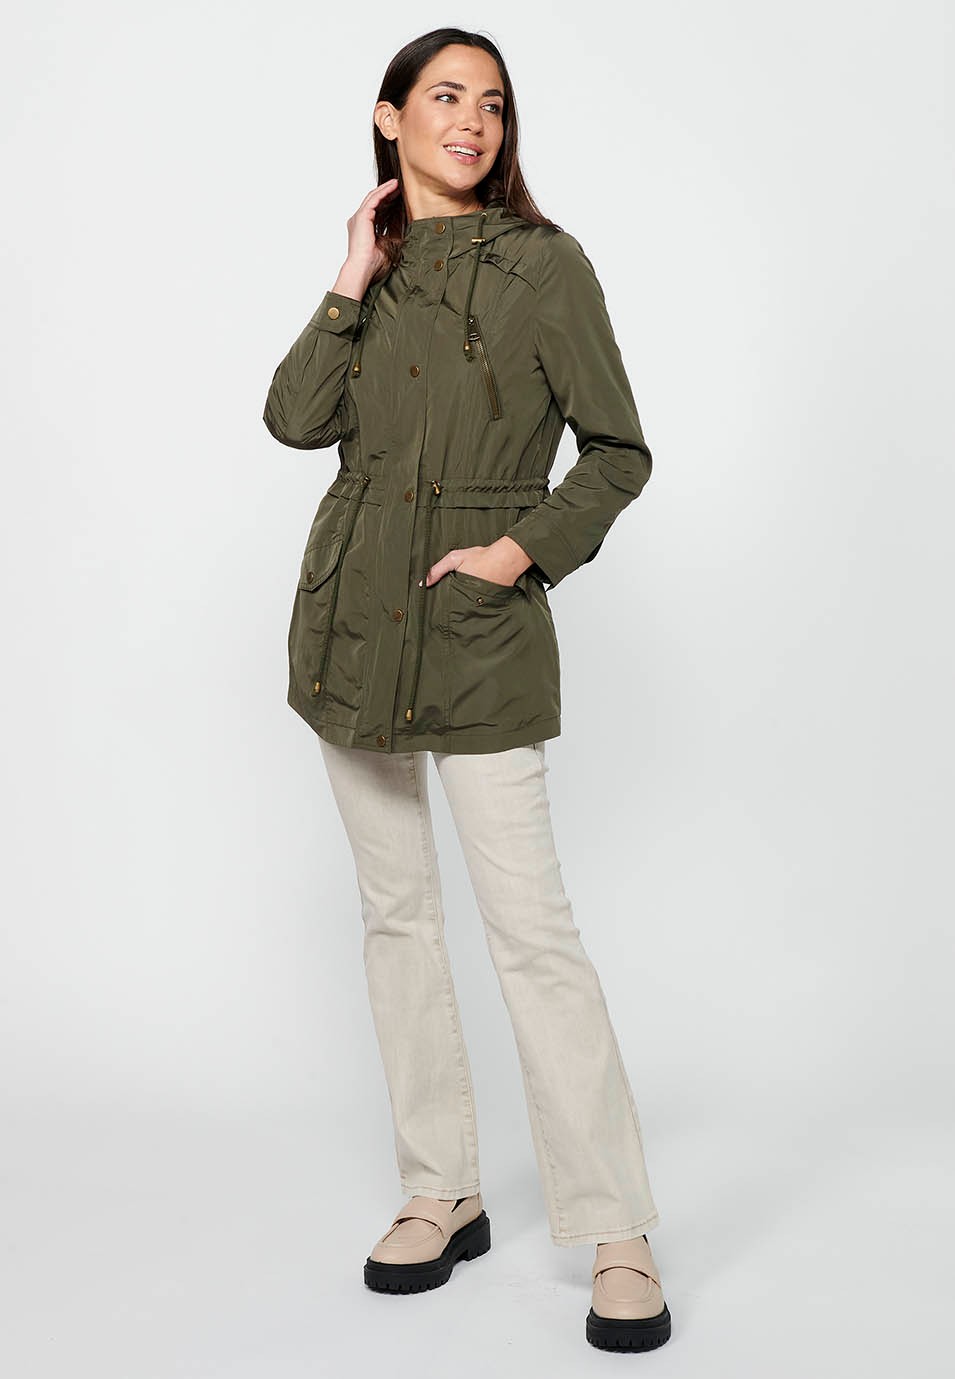 Women's Khaki Long Sleeve Zip Front Hooded Collar Parka Jacket with Pockets 5